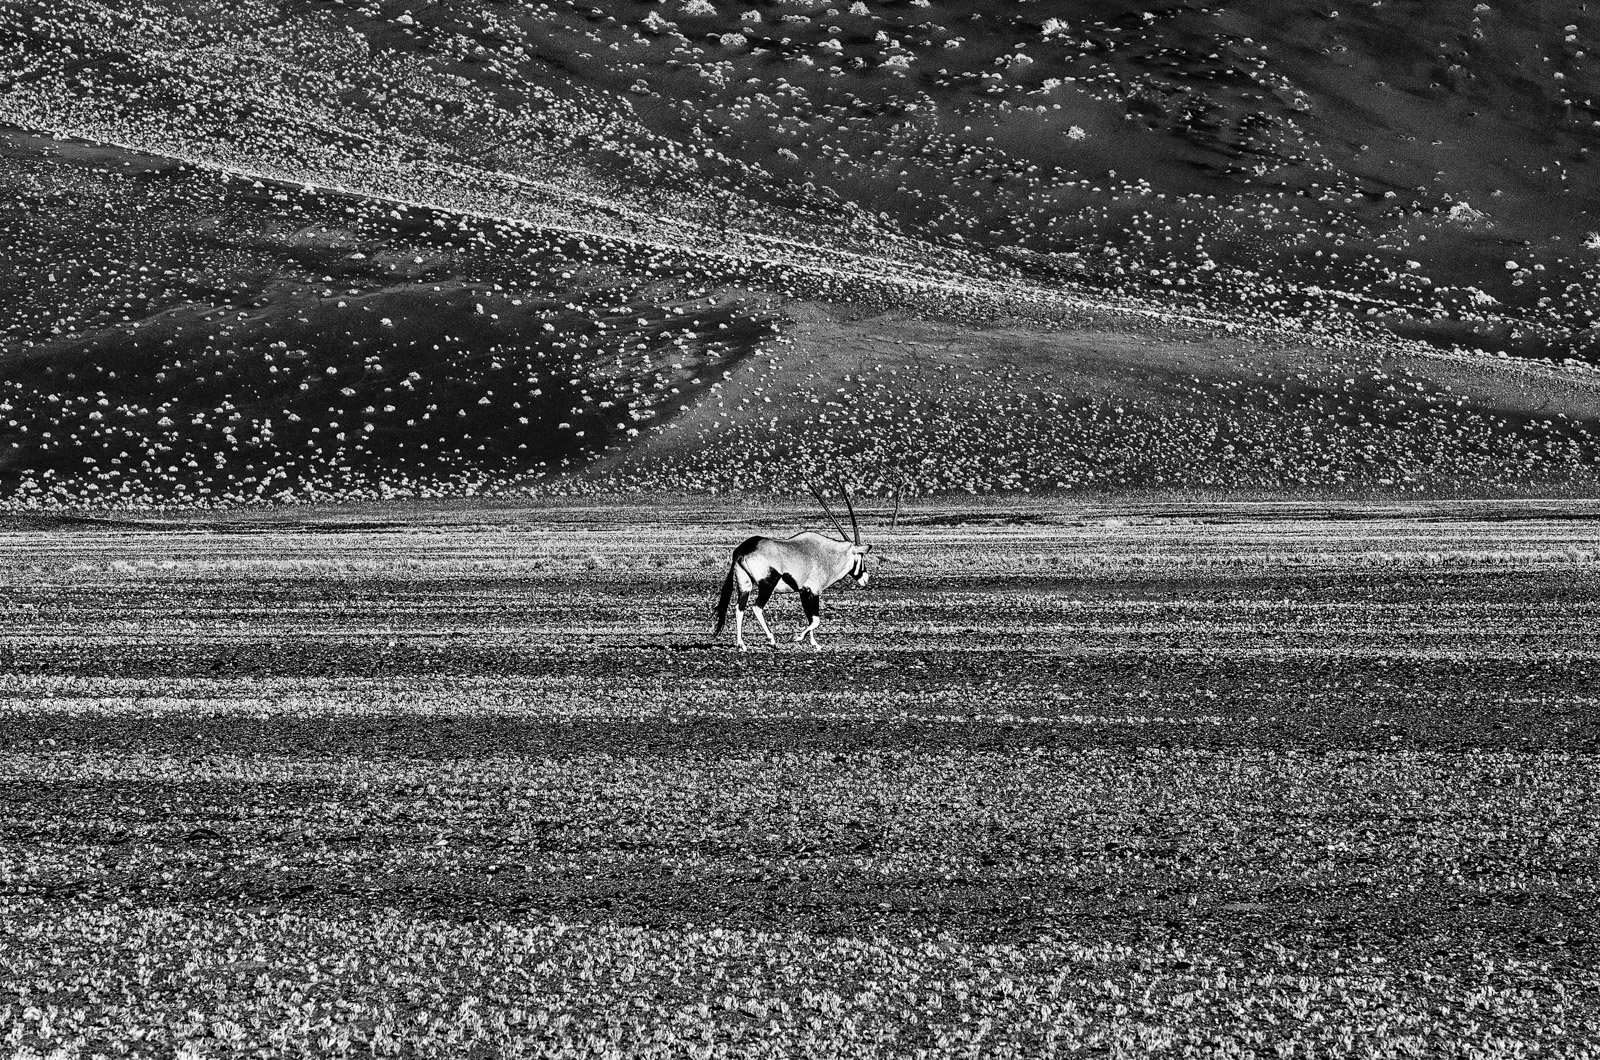 Oryx in Namib desert...